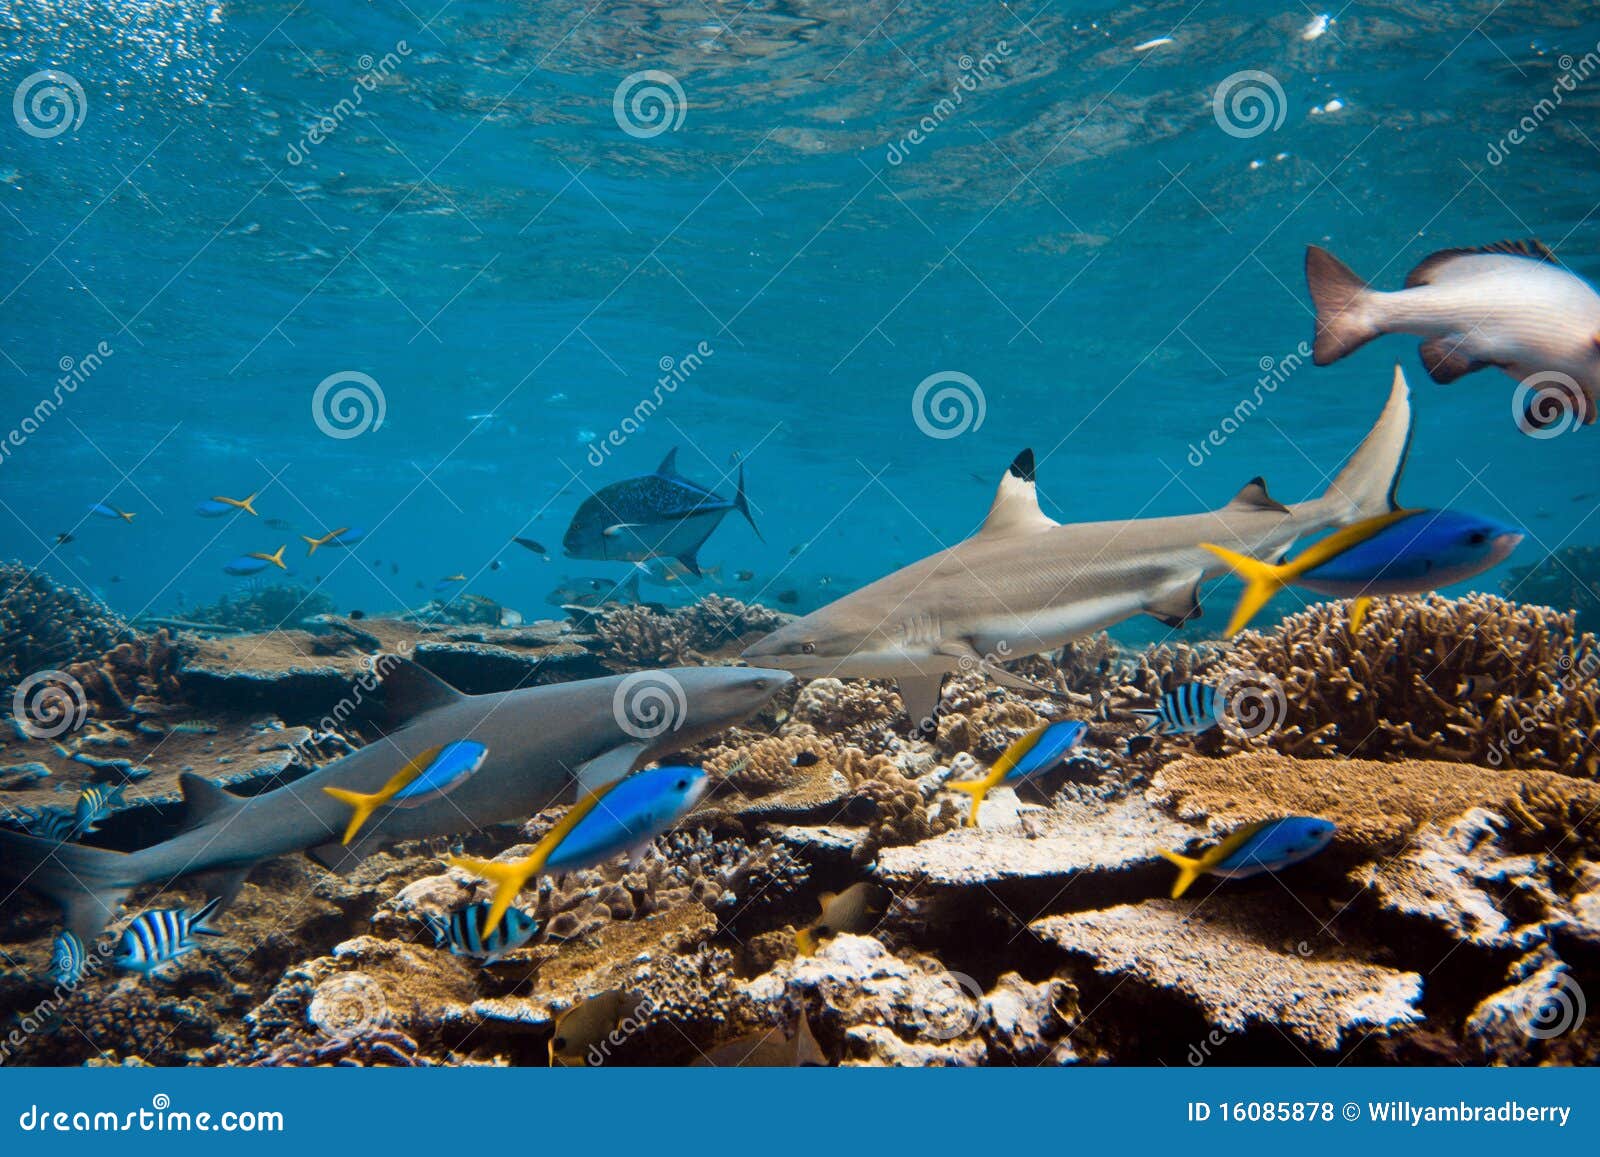 blacktip and whitetip sharks